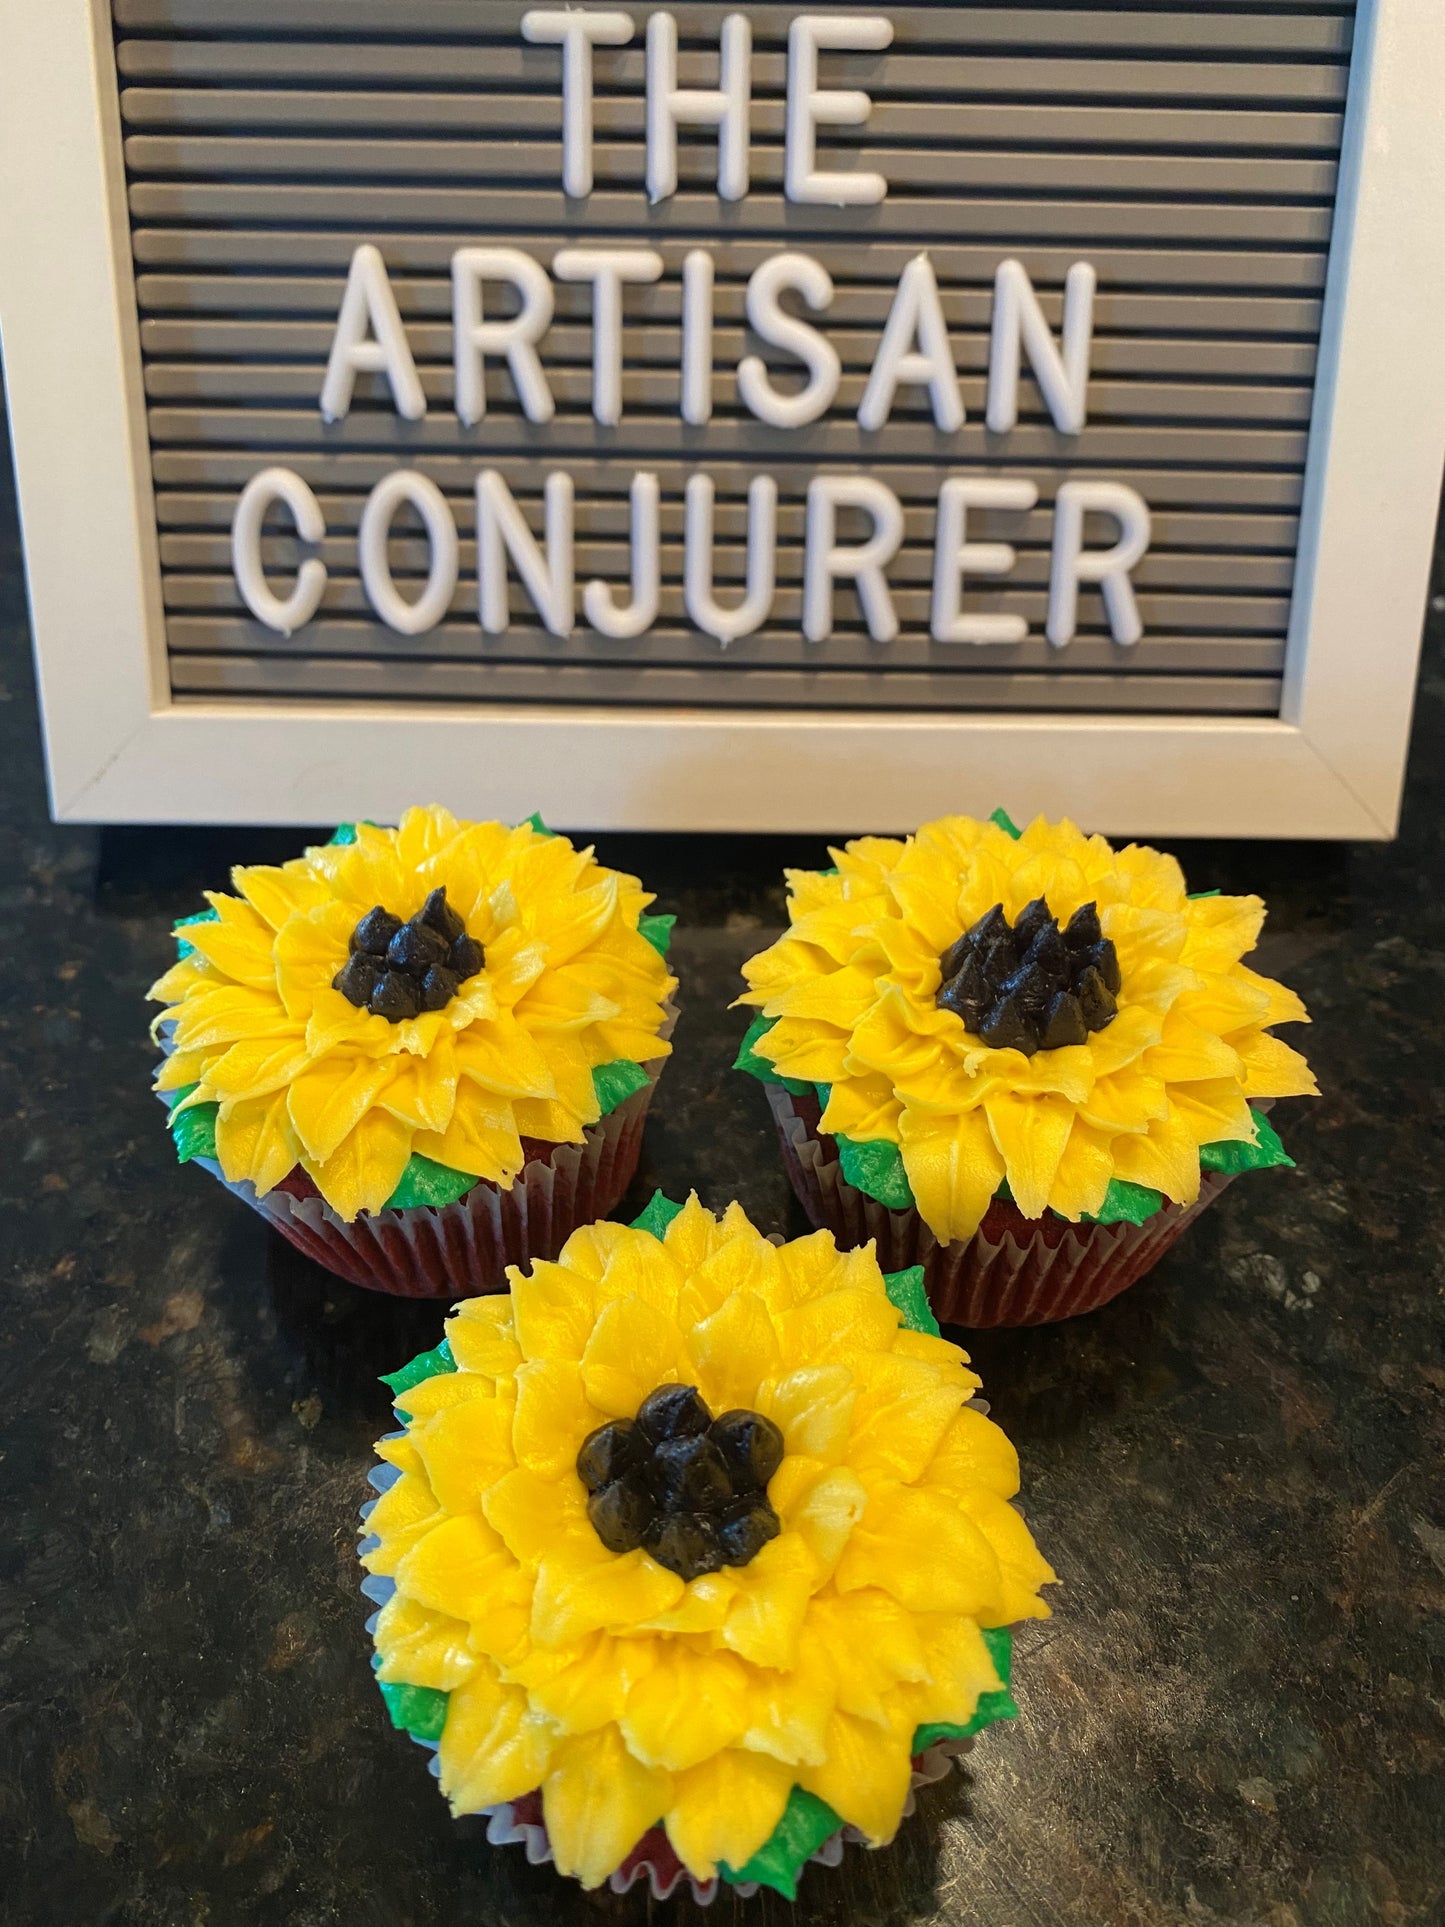 Custom Cupcakes